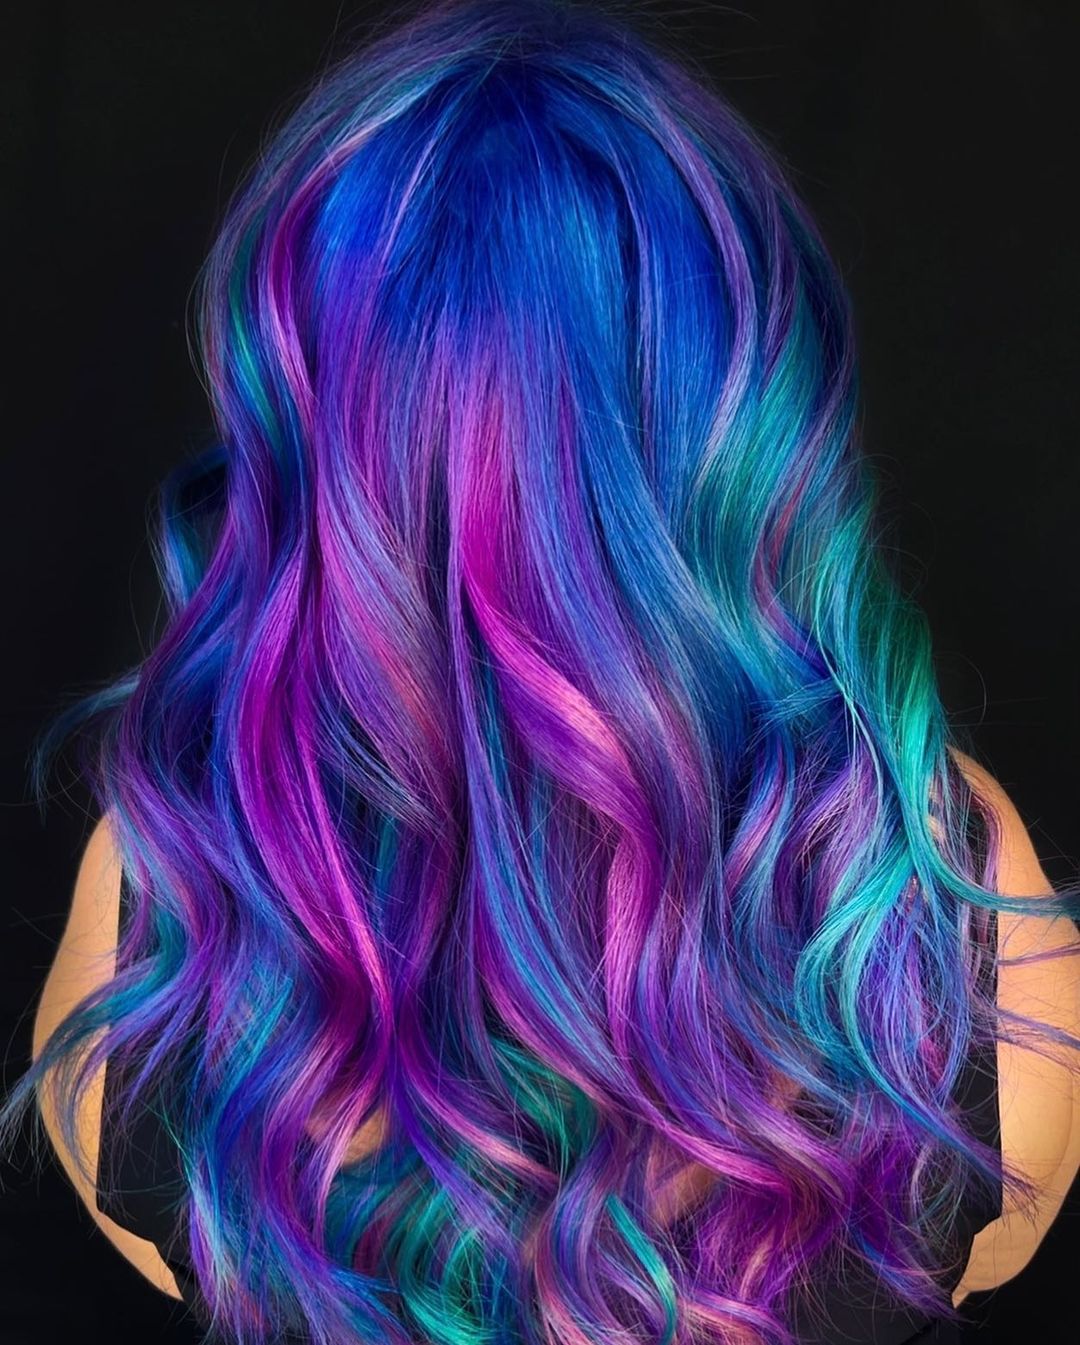 Mermaid Galaxy Hair on Long Curls